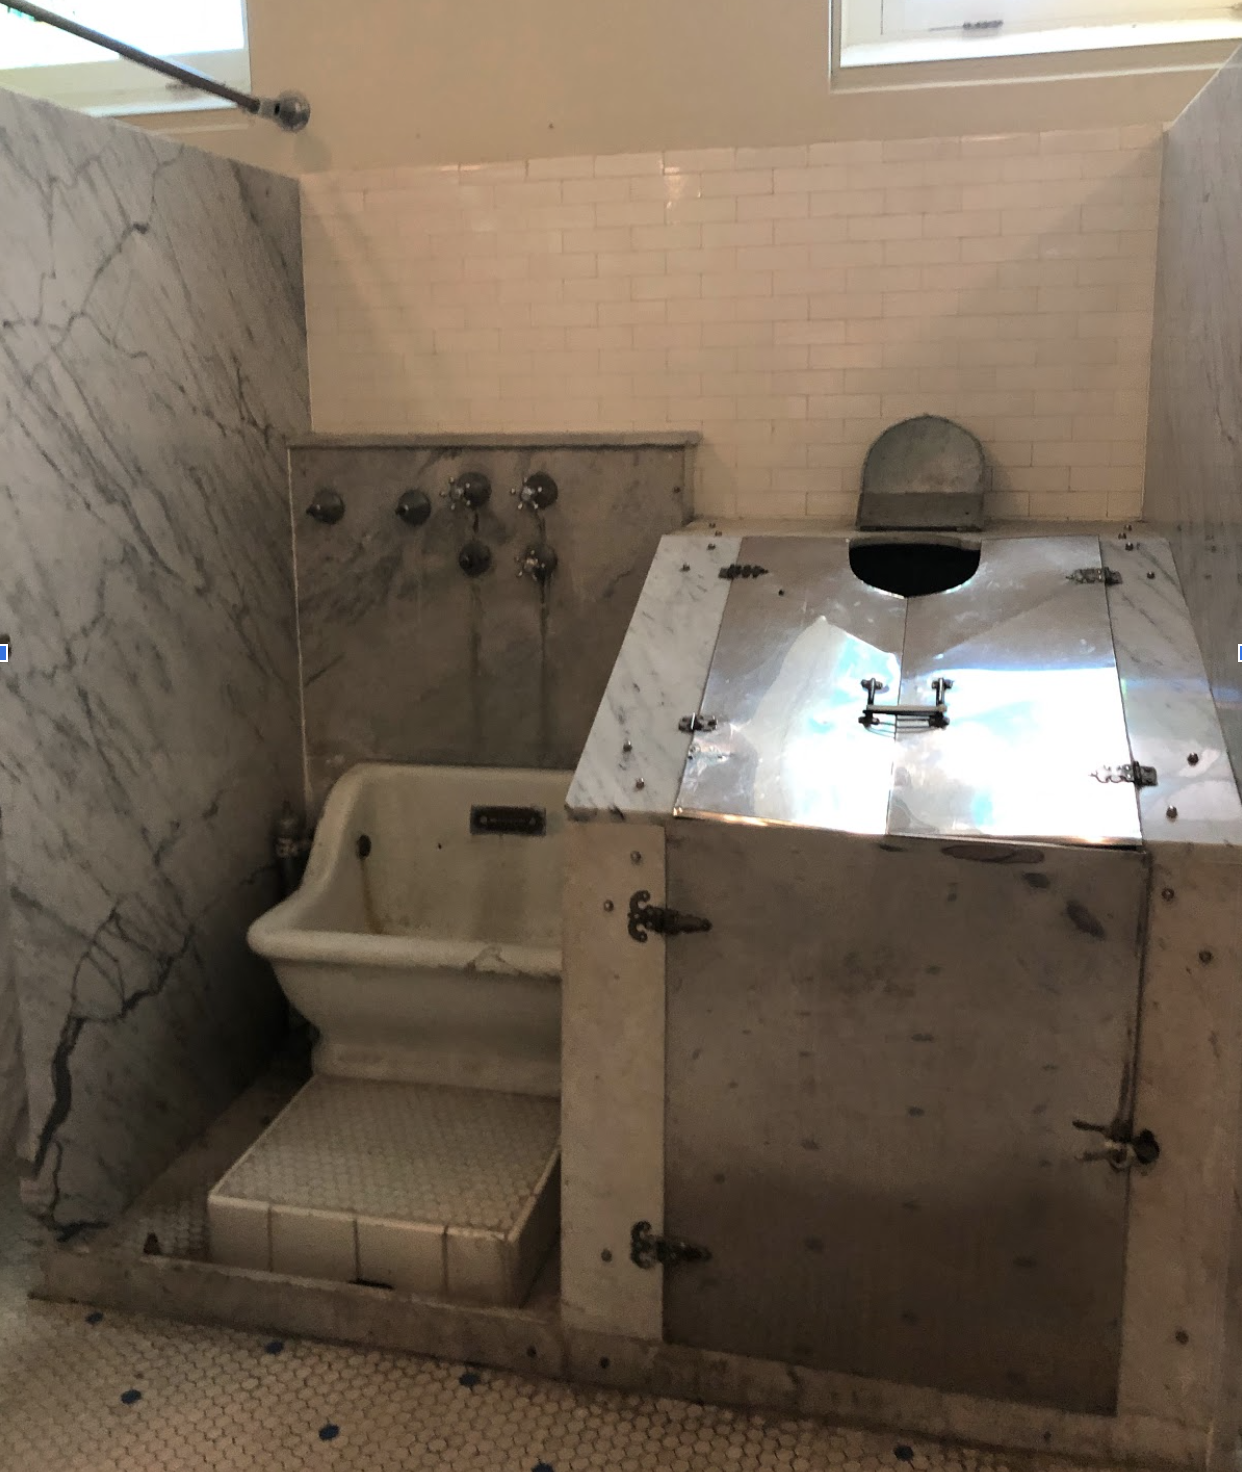 Sitz bath and steamer, Fordyce Bathhouse, photo by Karen Boudreaux, 6/17/19